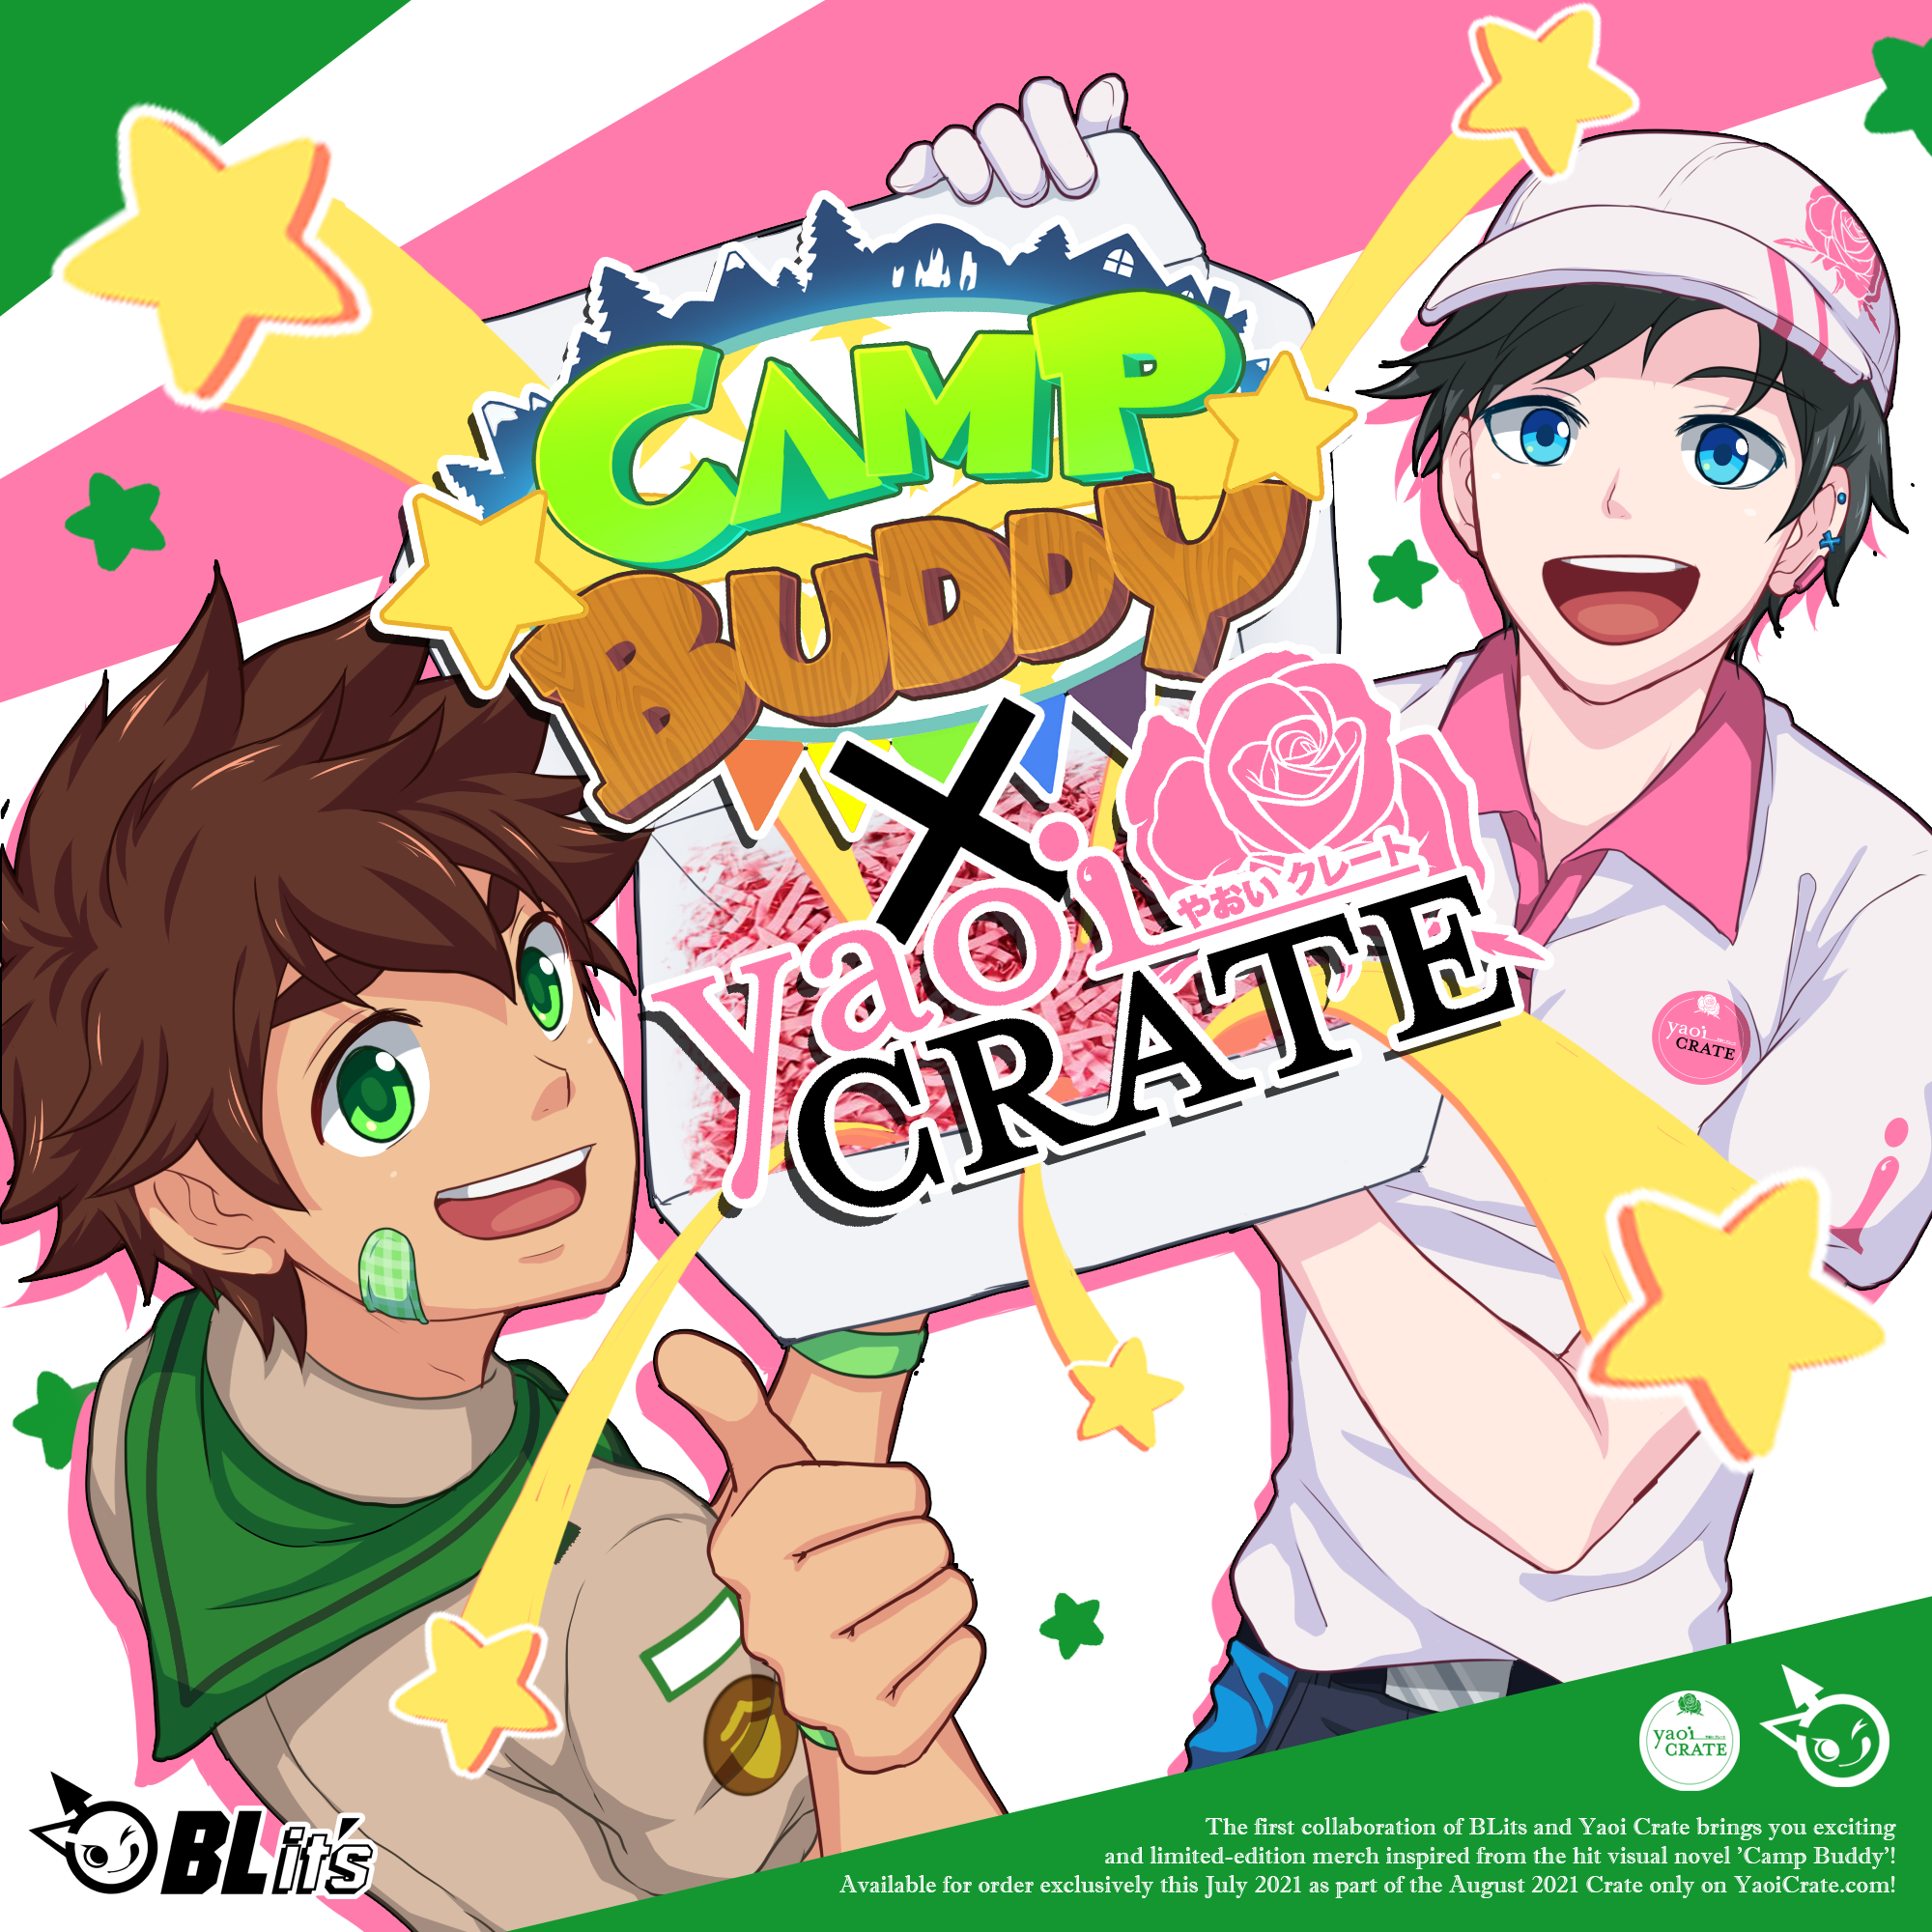 New Merch – Camp Buddy x Yaoi Crate